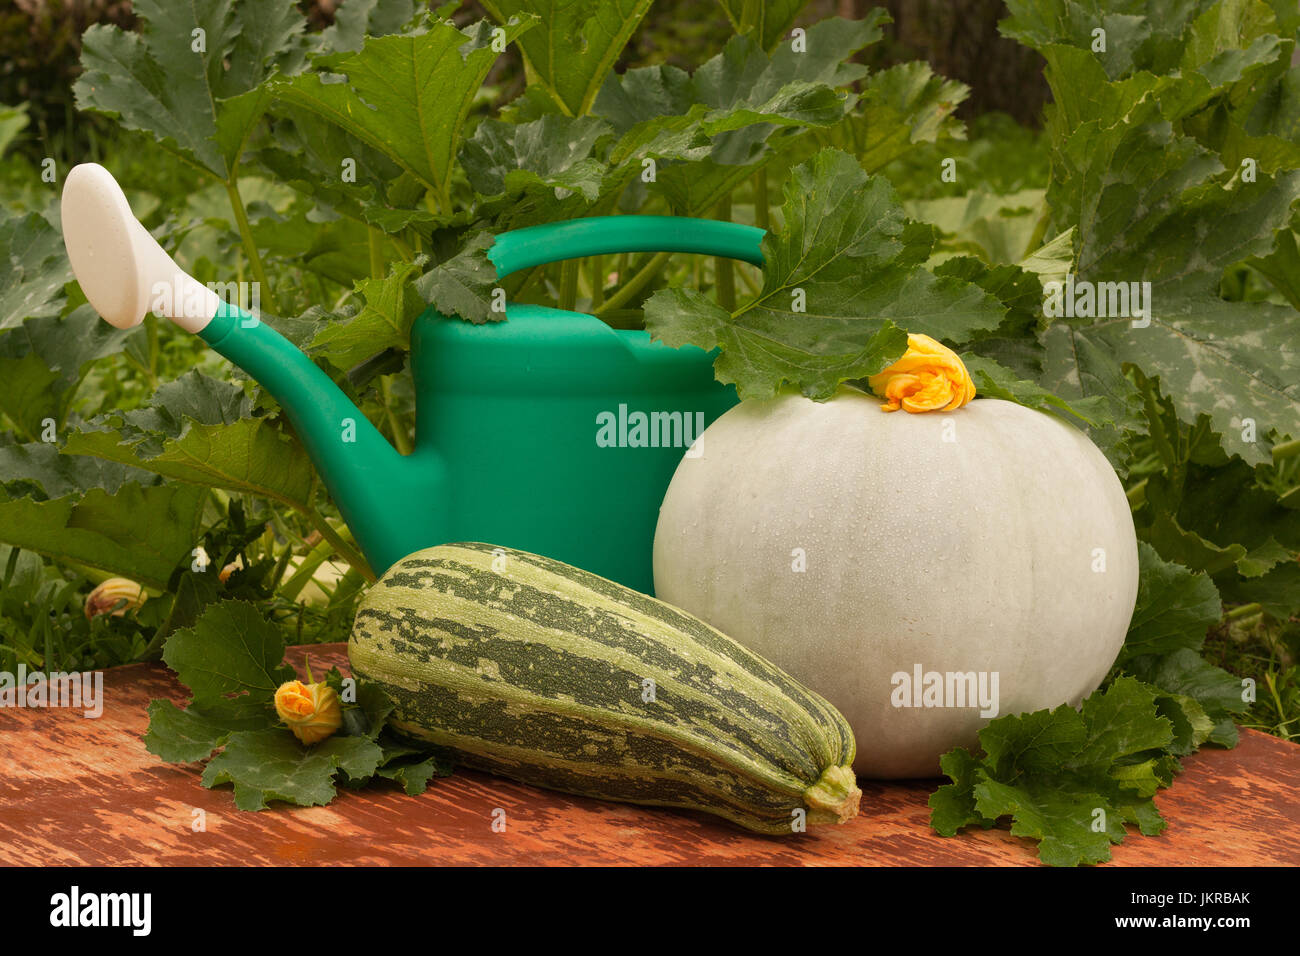 Green Watering Can And Organic Fresh Vegetables On Summer  Vegetable Garden. Fresh Vegetables: Vegetable Marrow And Pumpkin. Stock Photo